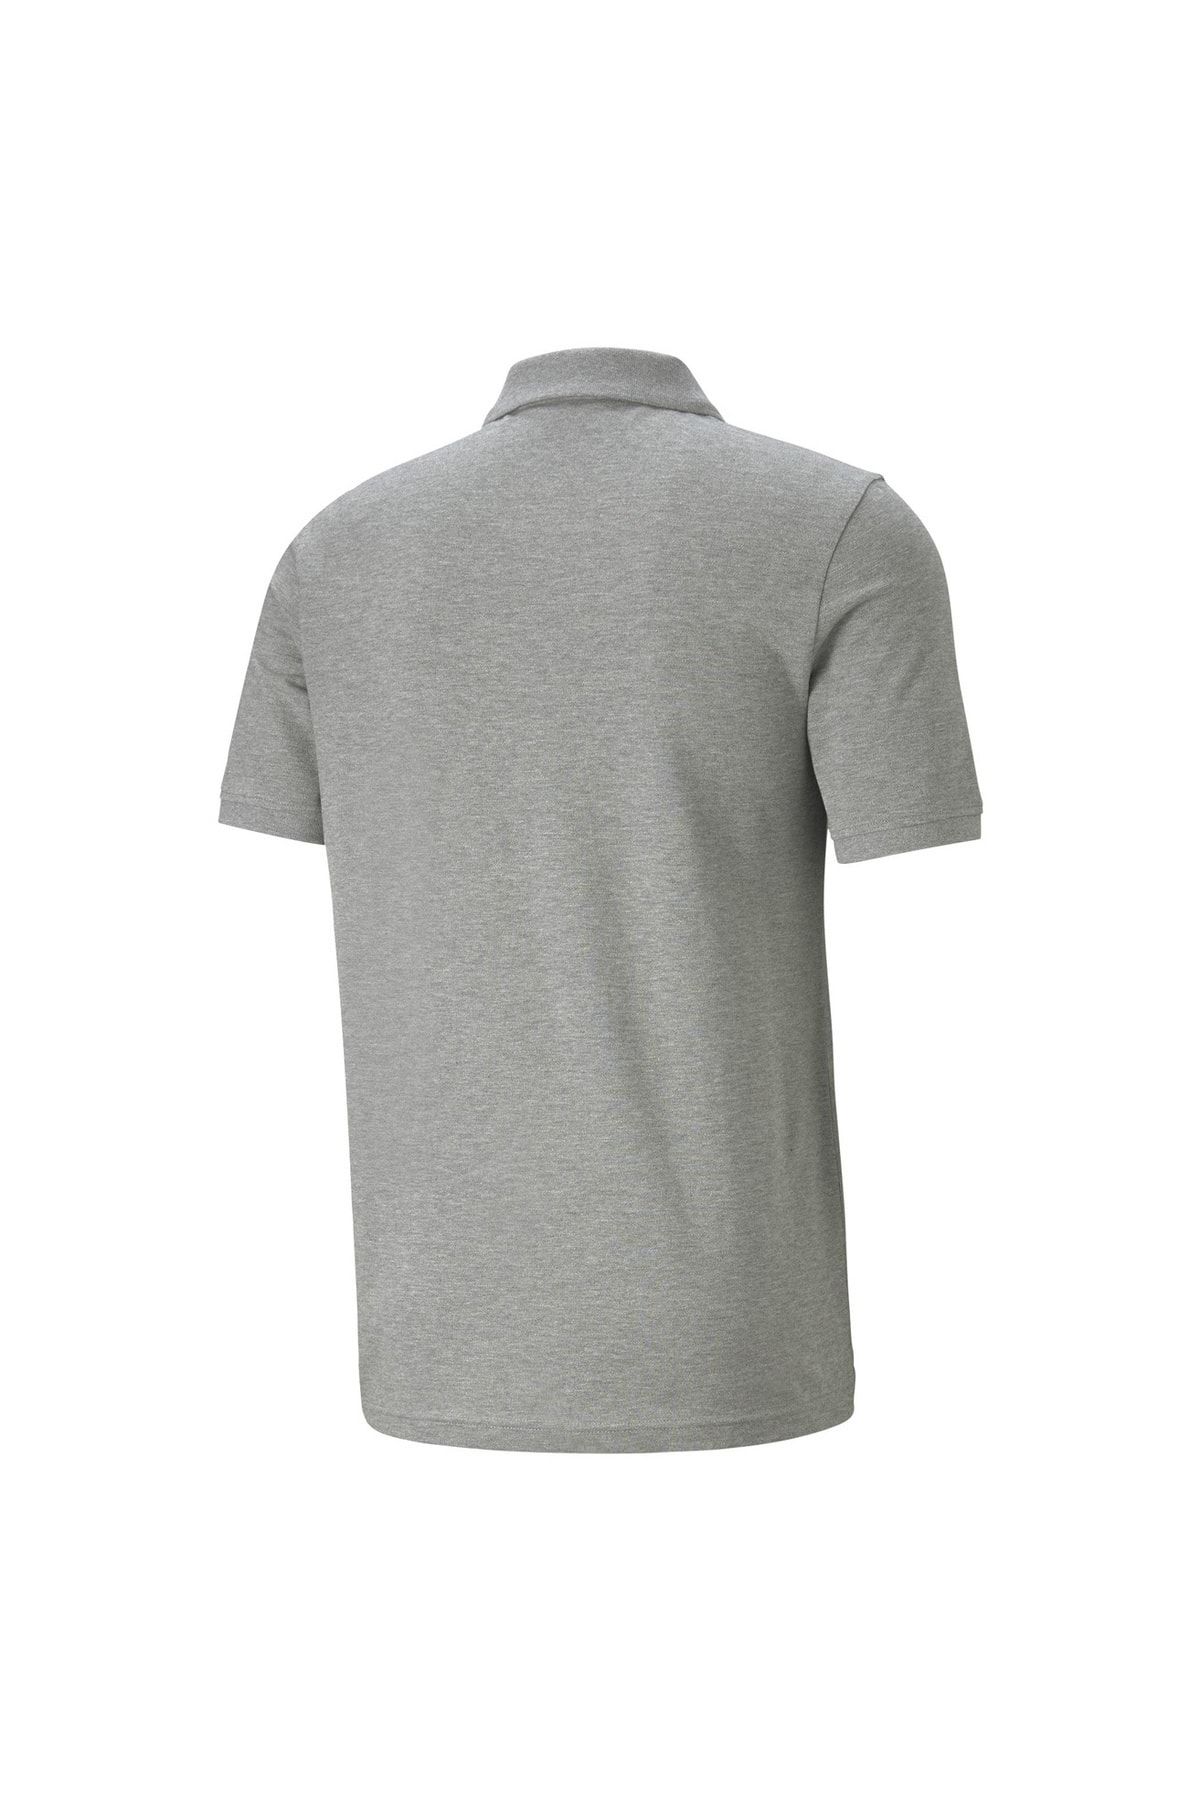 Puma Round Neck Plain Gray Men's T-Shirt 58667403 ESS Pique Polo Medium G -  Trendyol